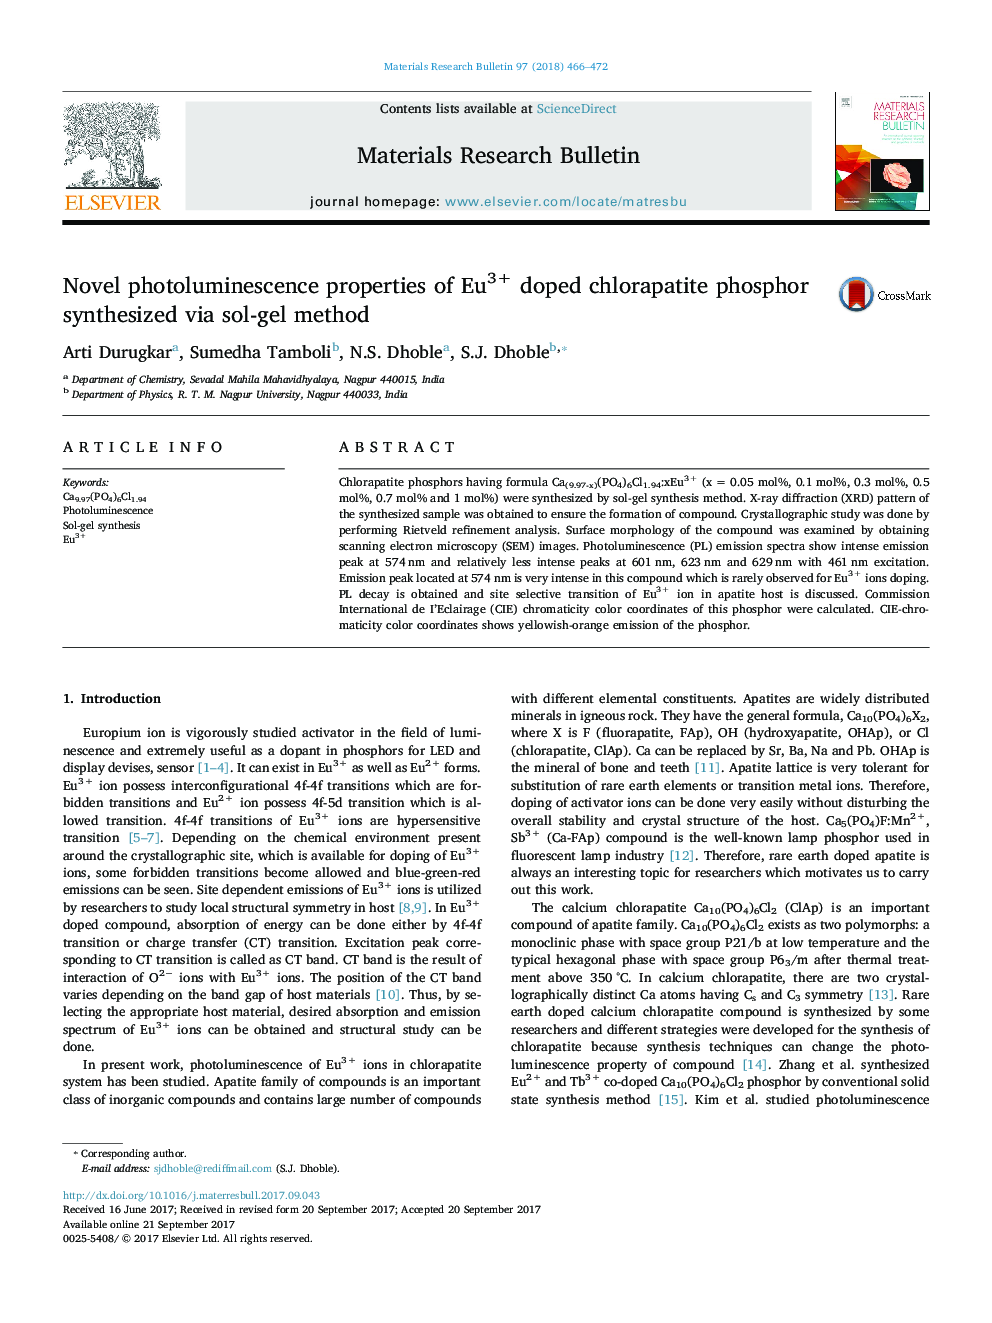 Novel photoluminescence properties of Eu3+ doped chlorapatite phosphor synthesized via sol-gel method